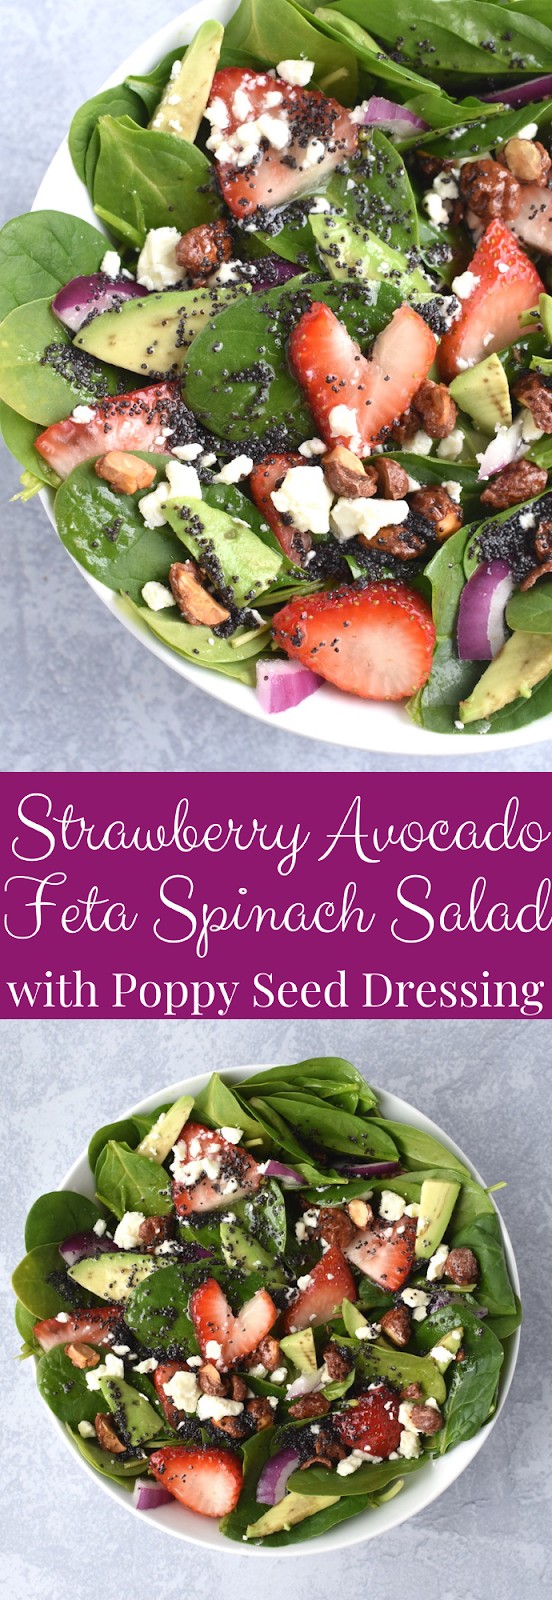 Strawberry Avocado Feta Spinach Salad with Poppy Seed Dressing recipe